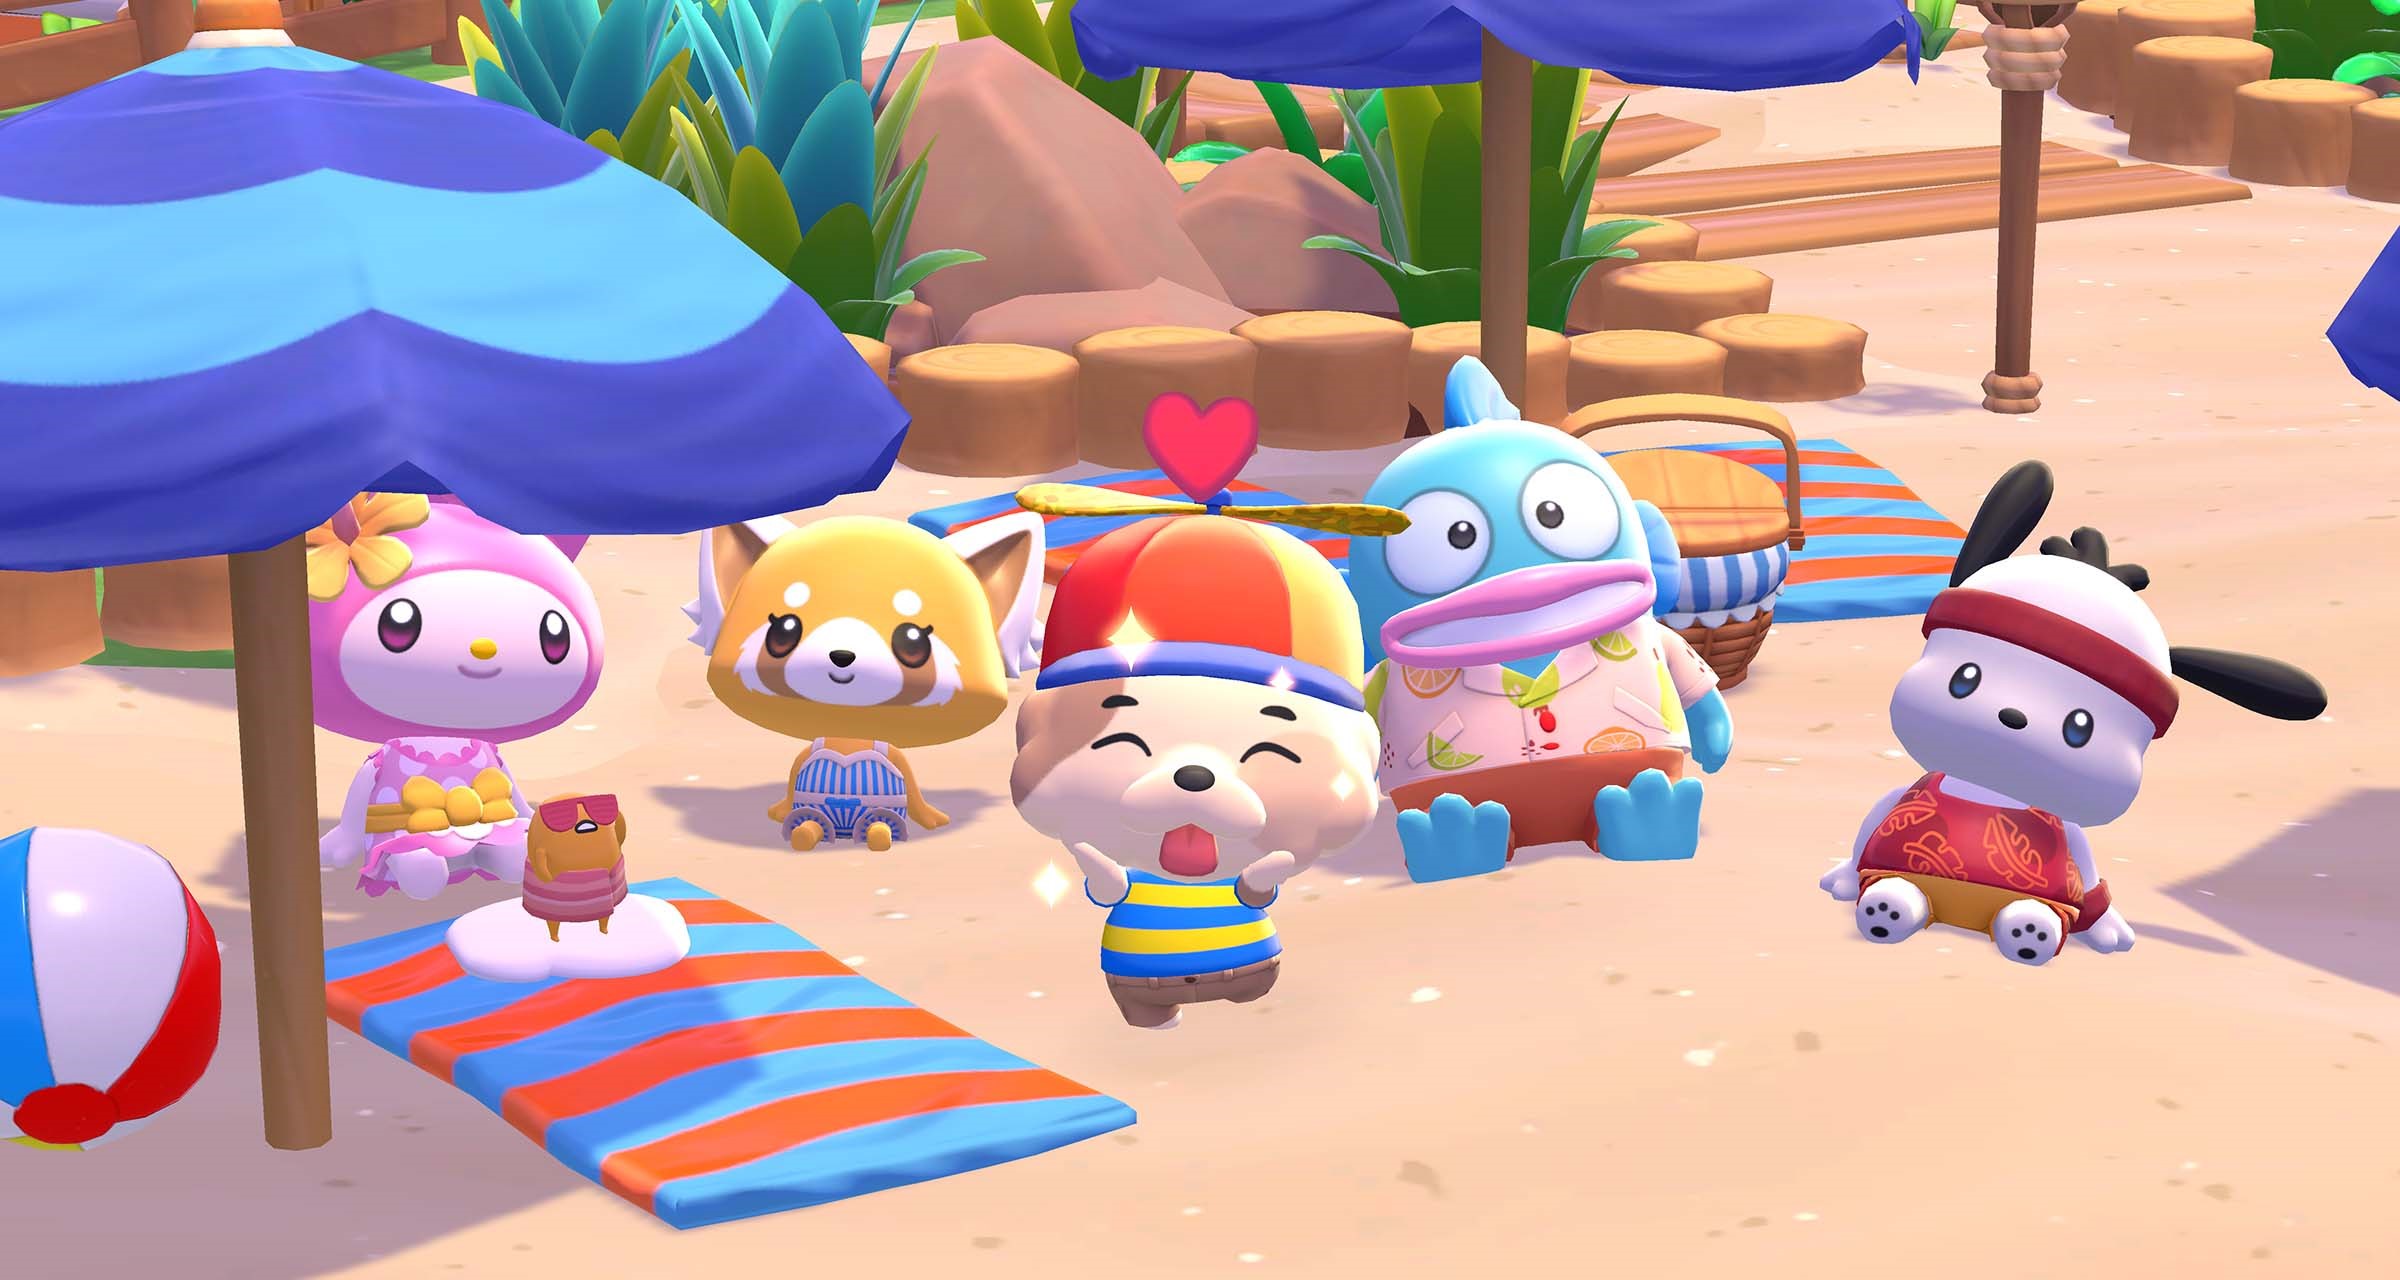 Hello Kitty: Island Adventure is the summer vacation I needed